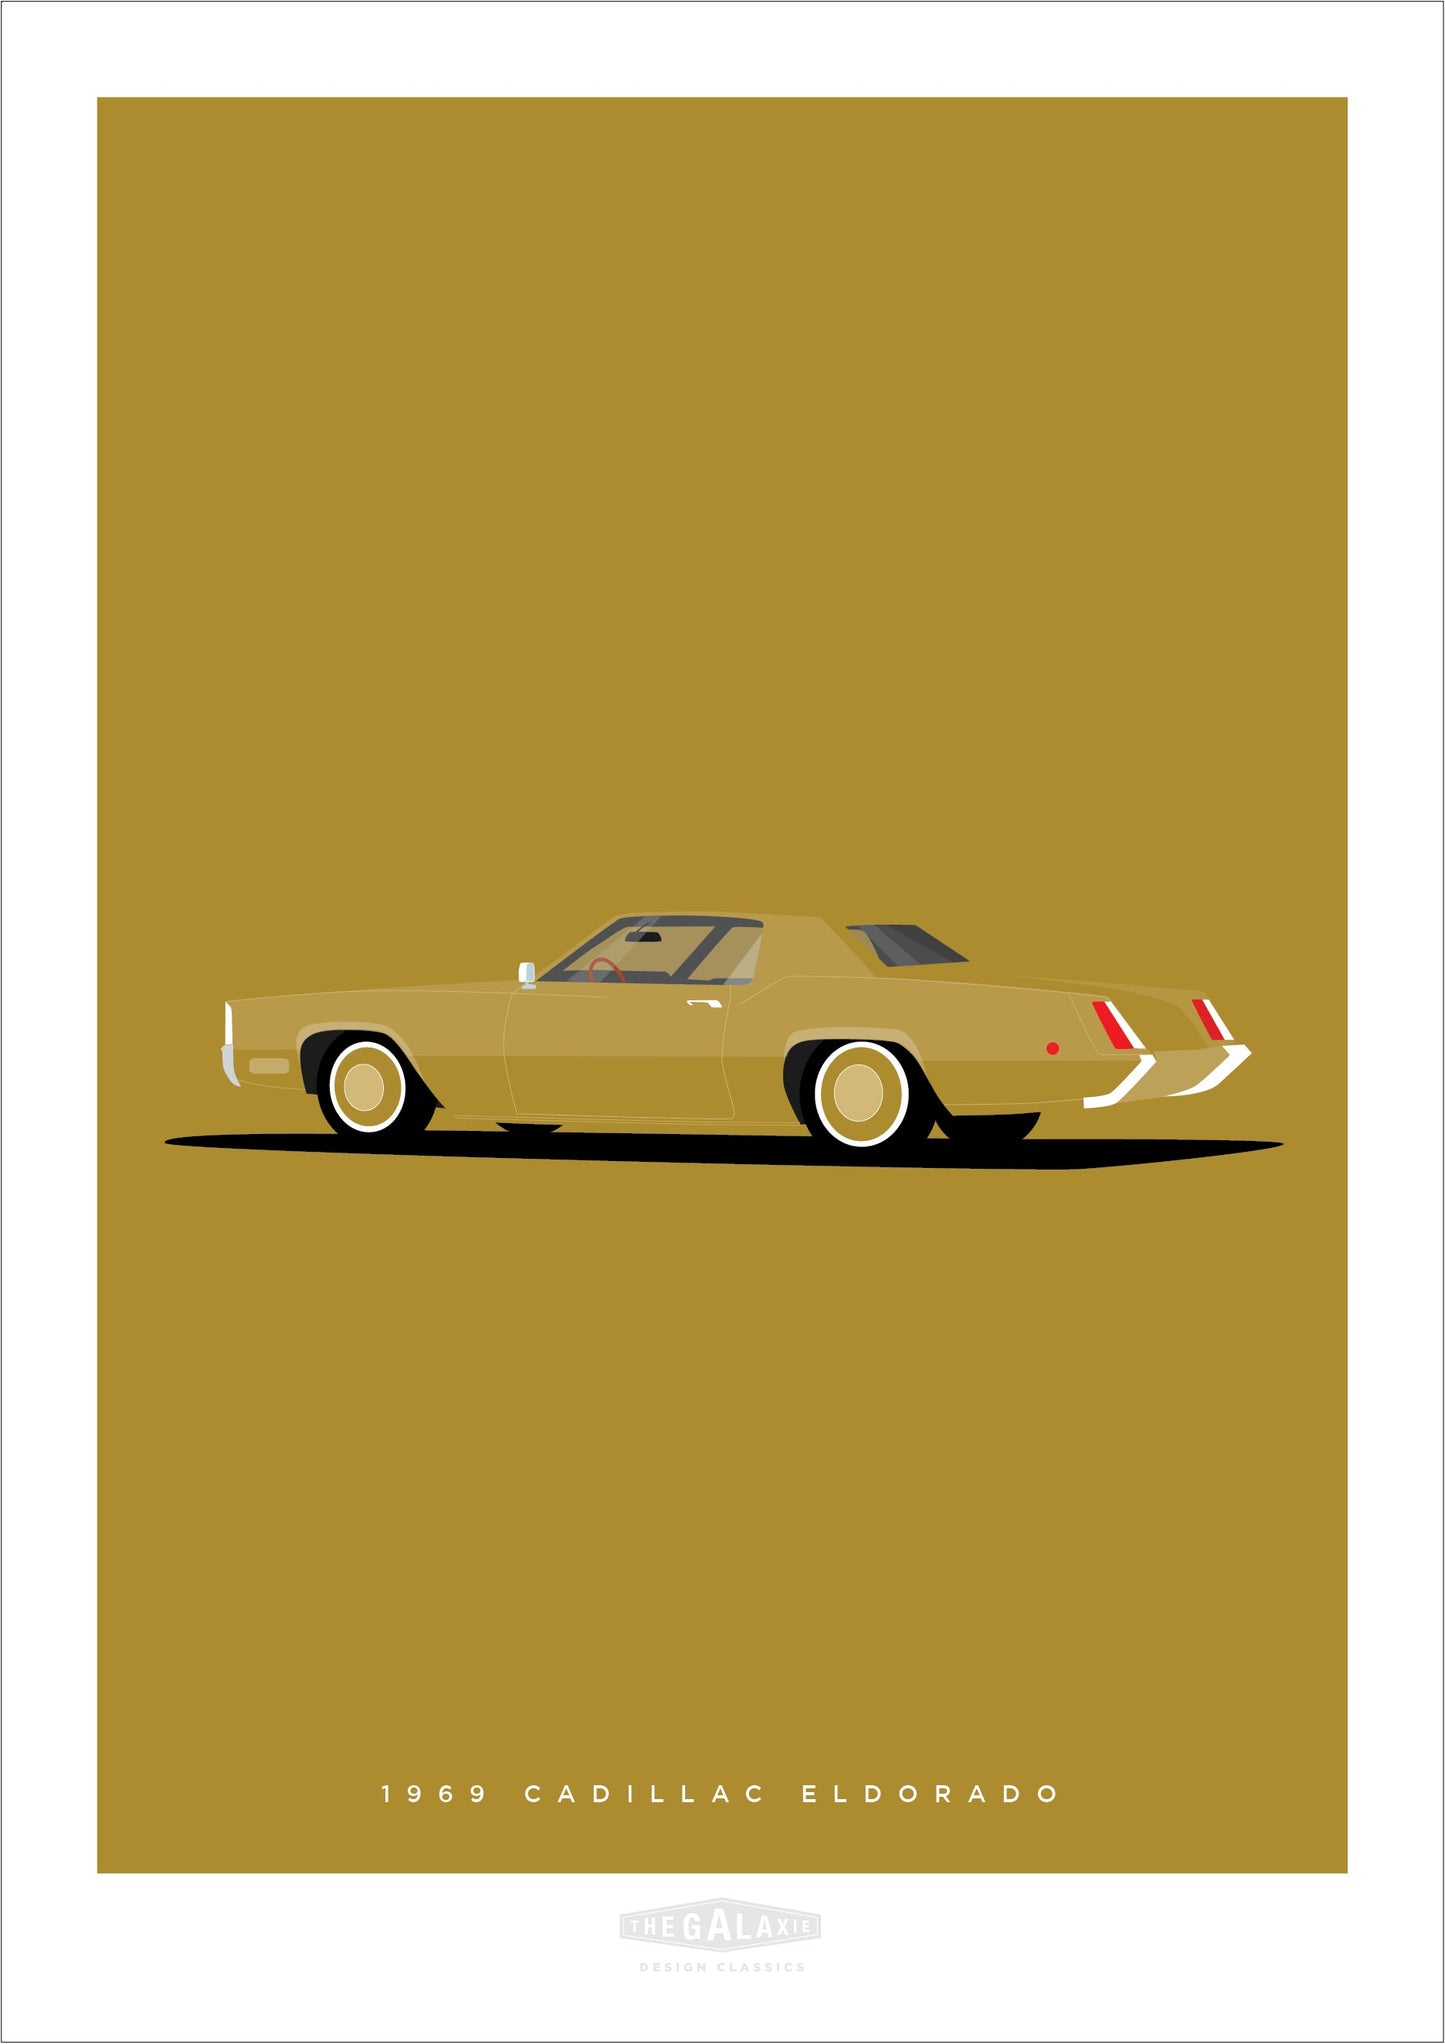 Beautiful hand drawn poster of an elegant gold 1969 Cadillac Eldorado on a soft gold background.